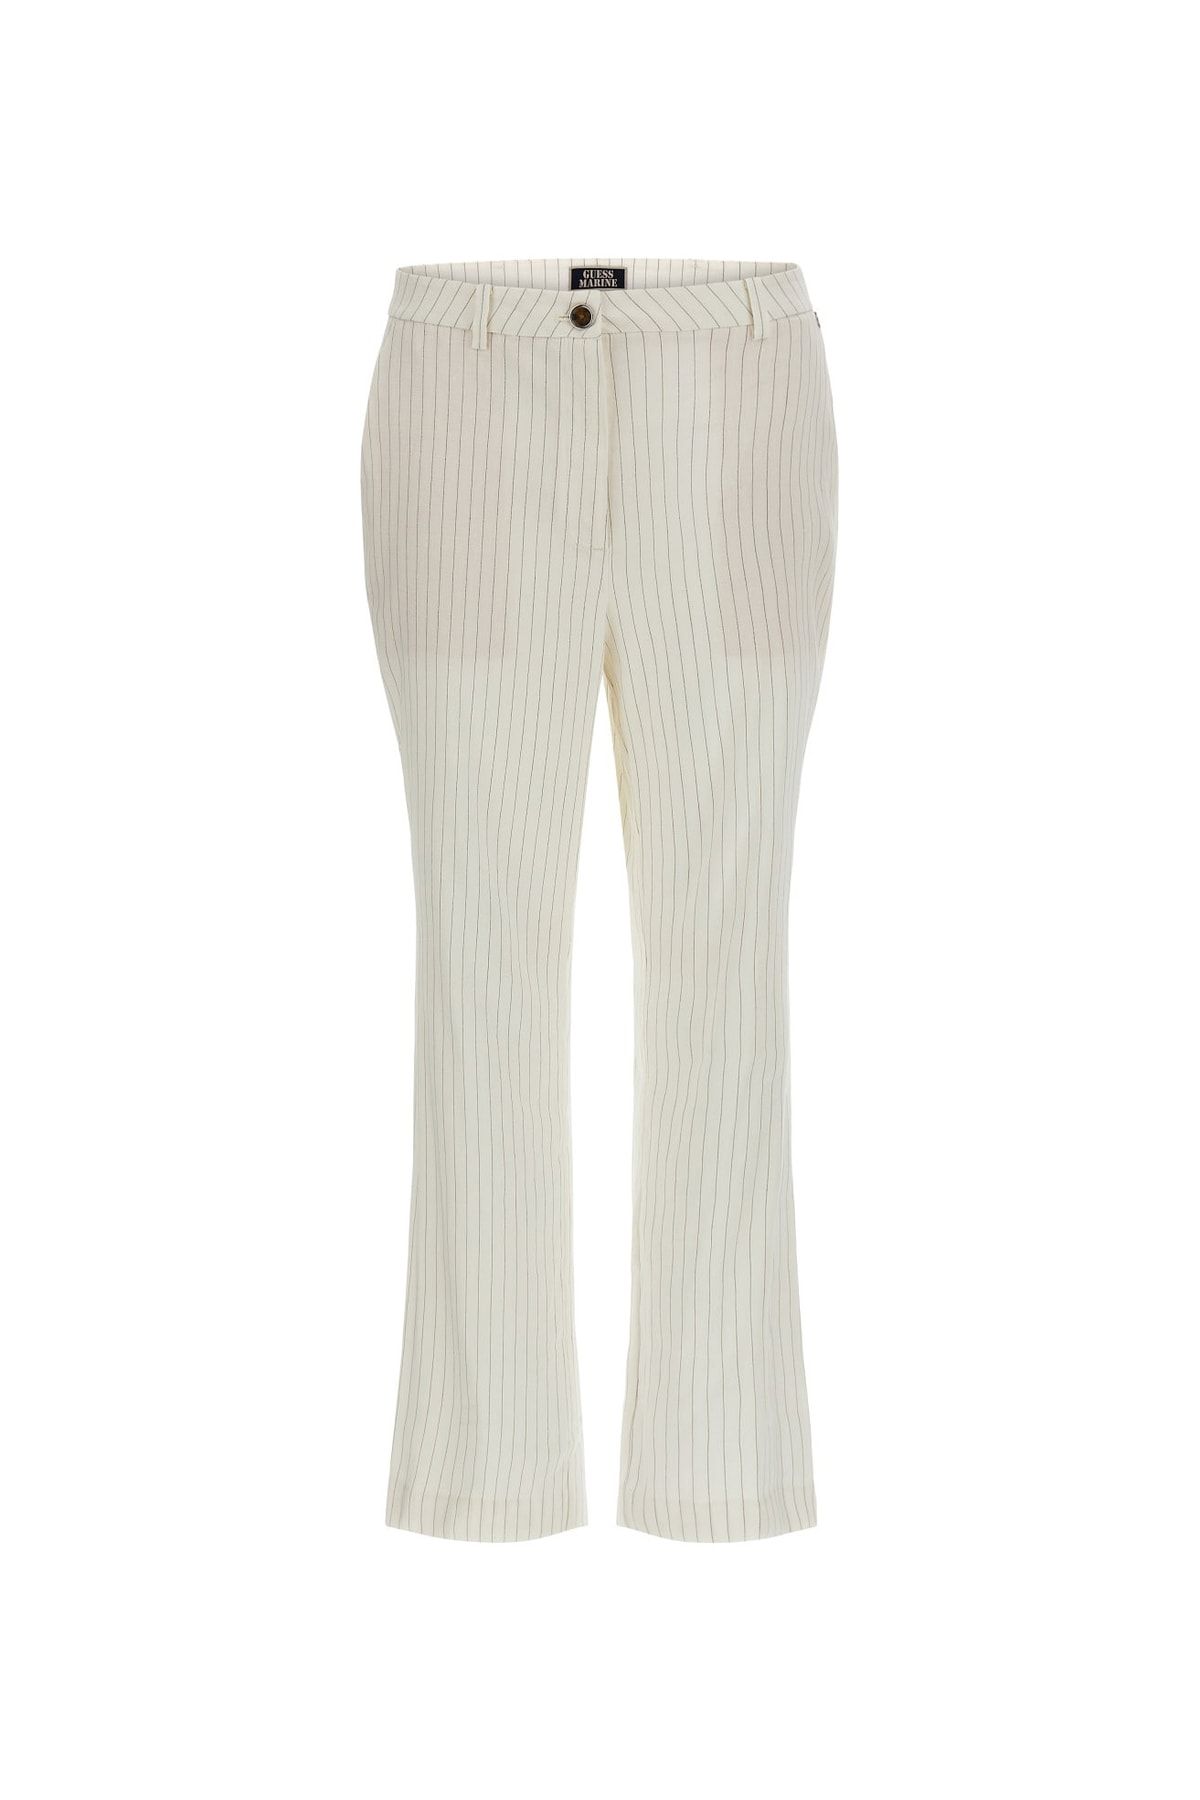 Guess Normal Bel Slim Fit Beyaz Kadın Pantolon W3gb11wfcv0s02q